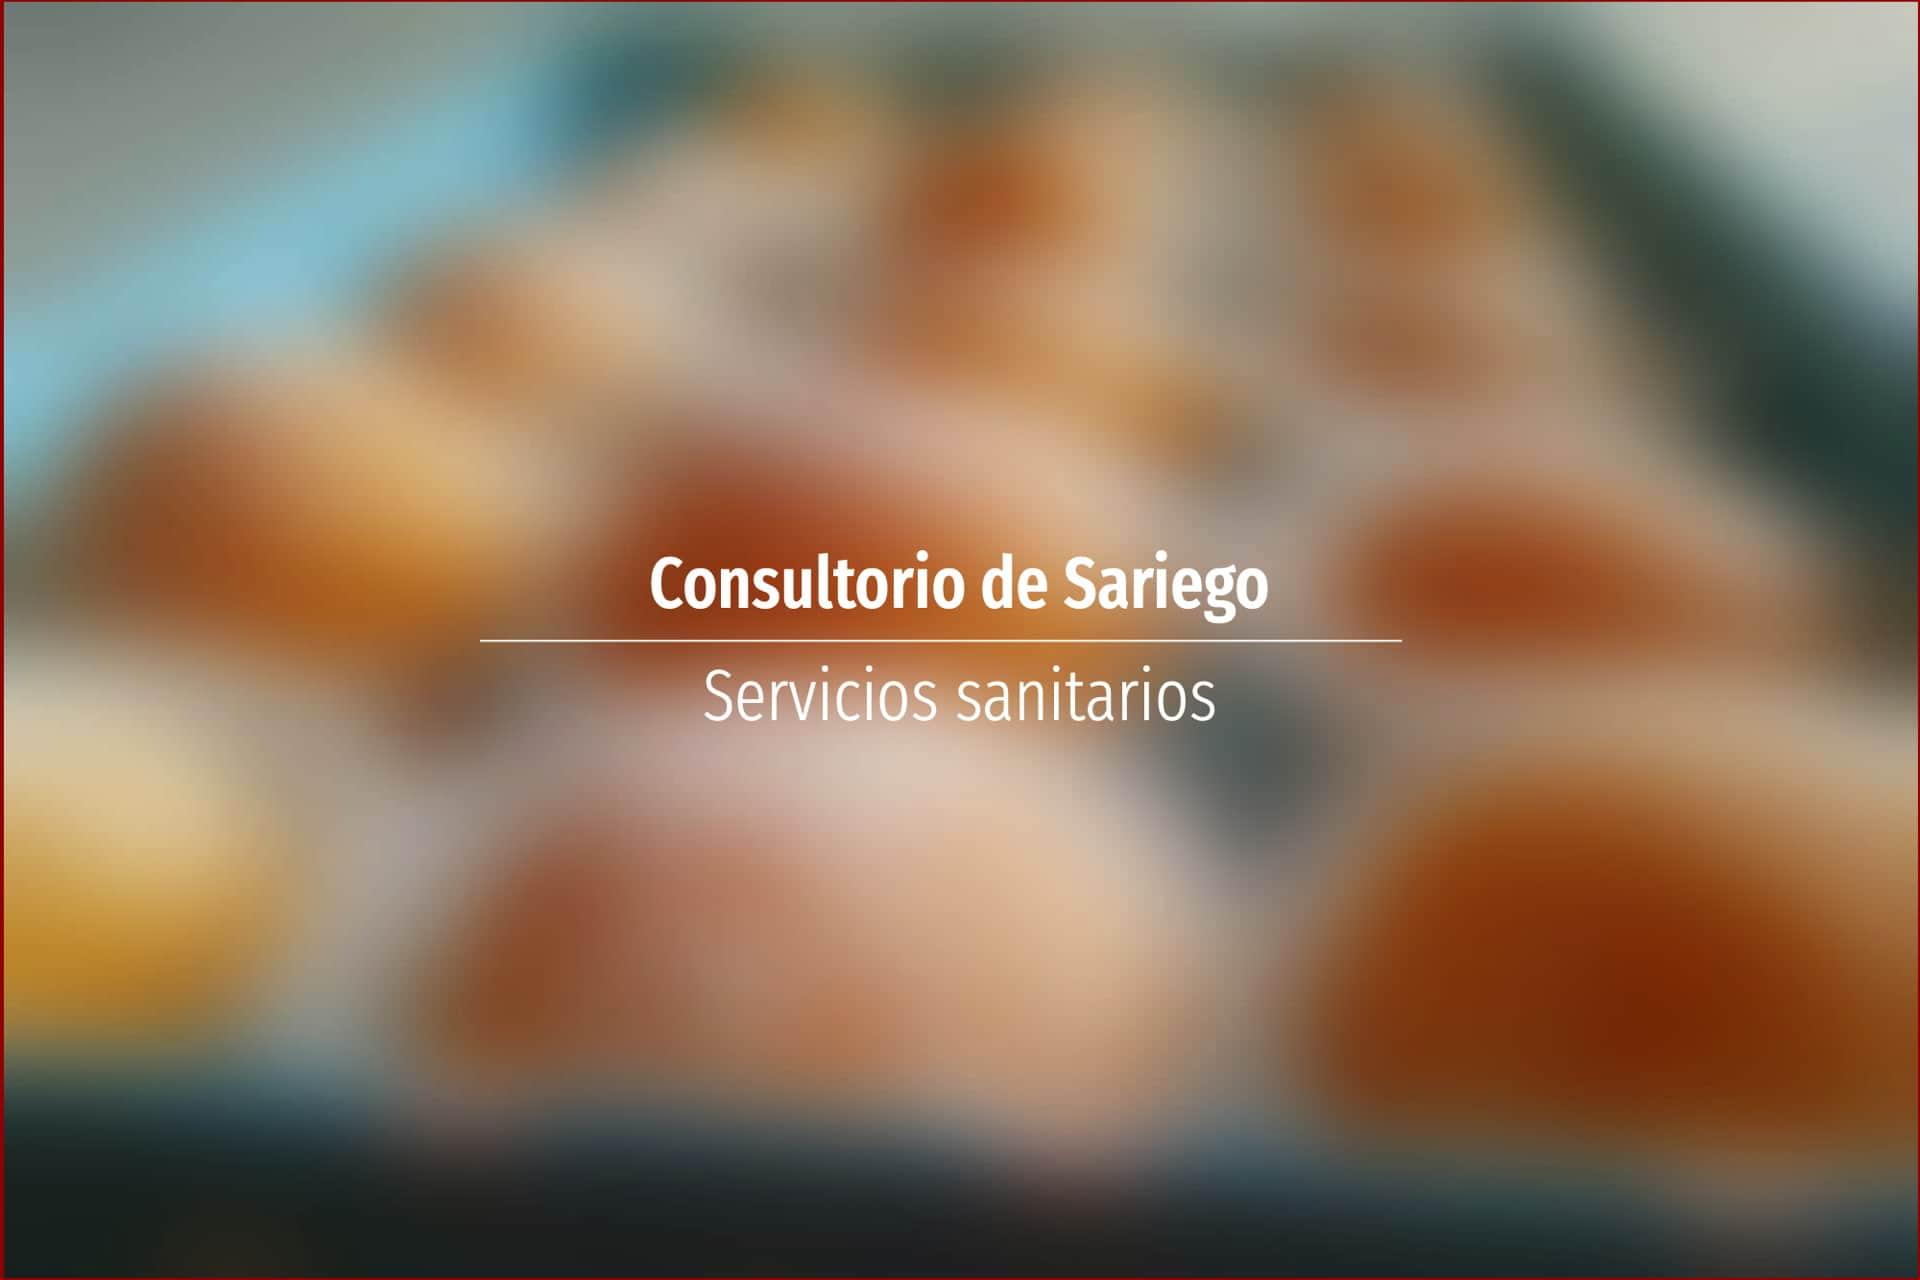 Consultorio de Sariego